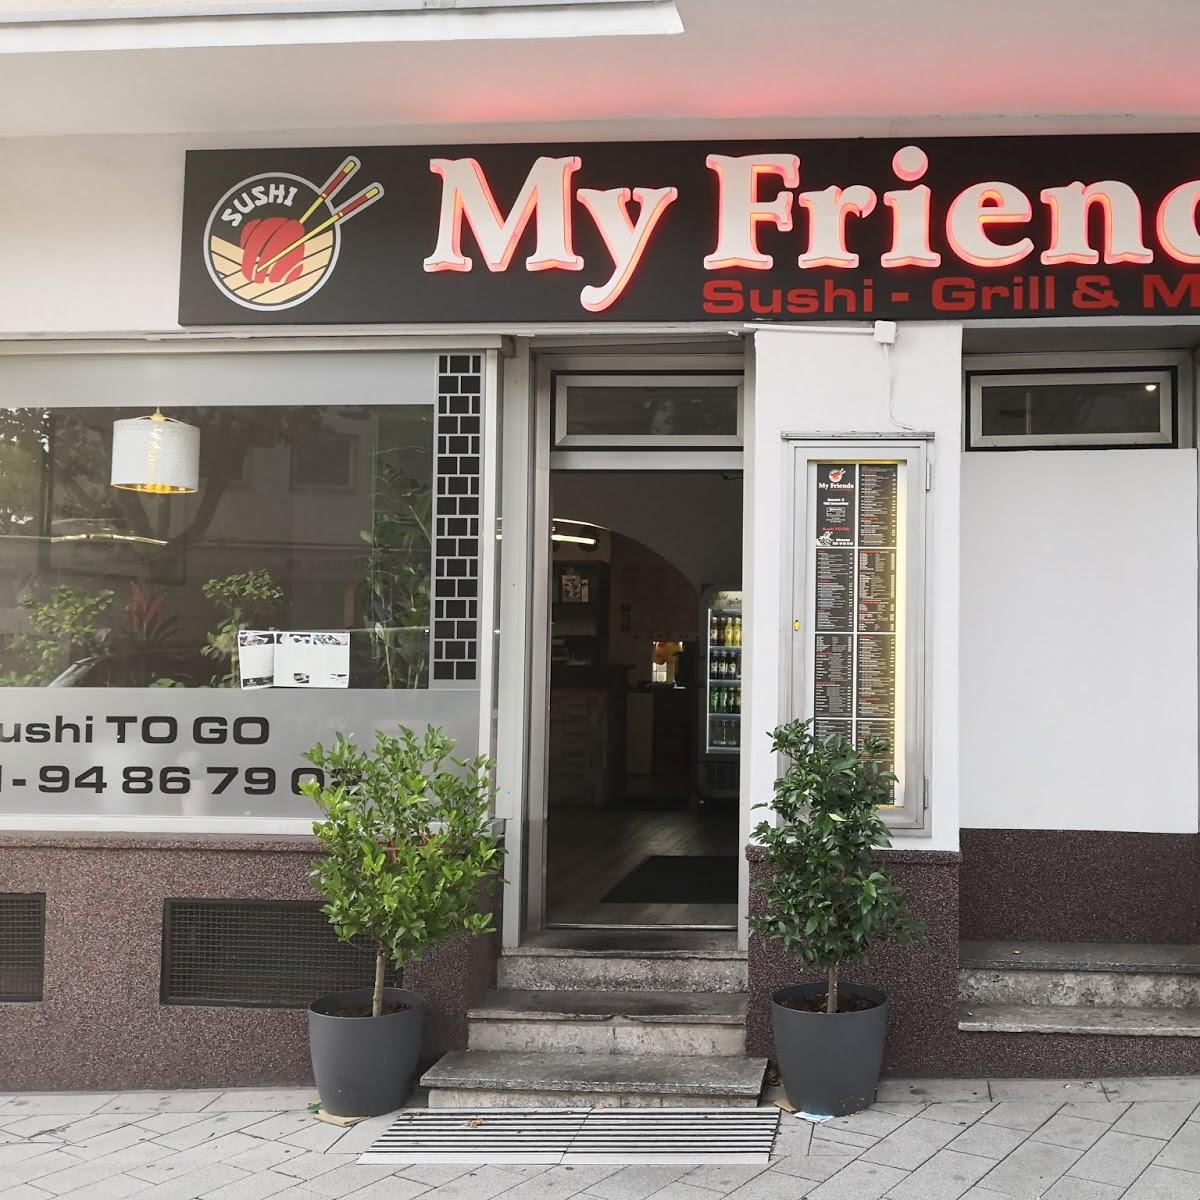 Restaurant "My Friends Sushi-Grill & More" in Dortmund